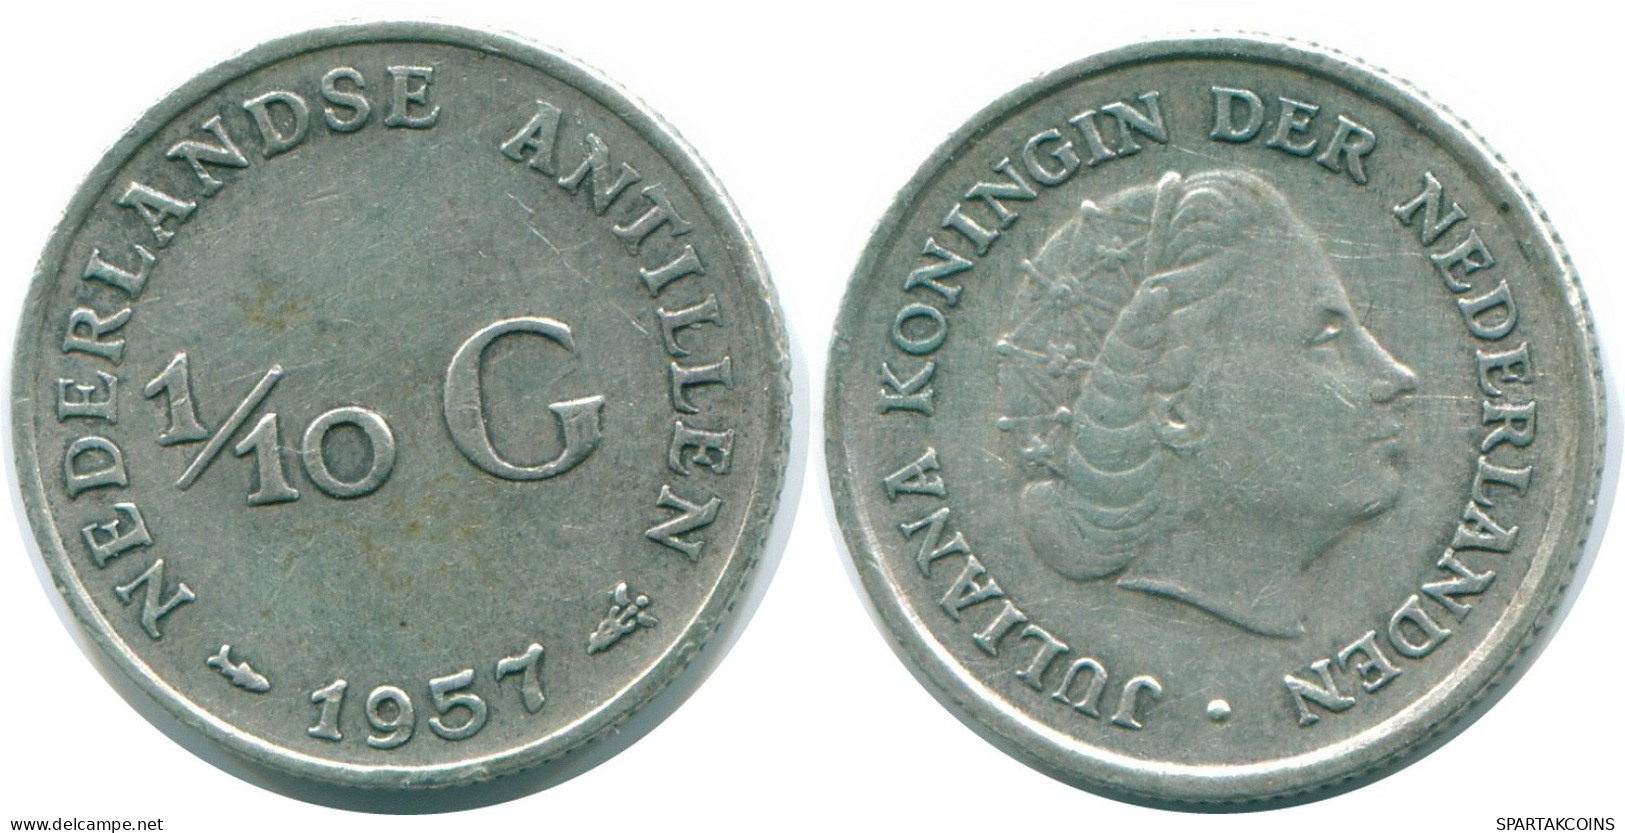 1/10 GULDEN 1957 NETHERLANDS ANTILLES SILVER Colonial Coin #NL12159.3.U.A - Netherlands Antilles